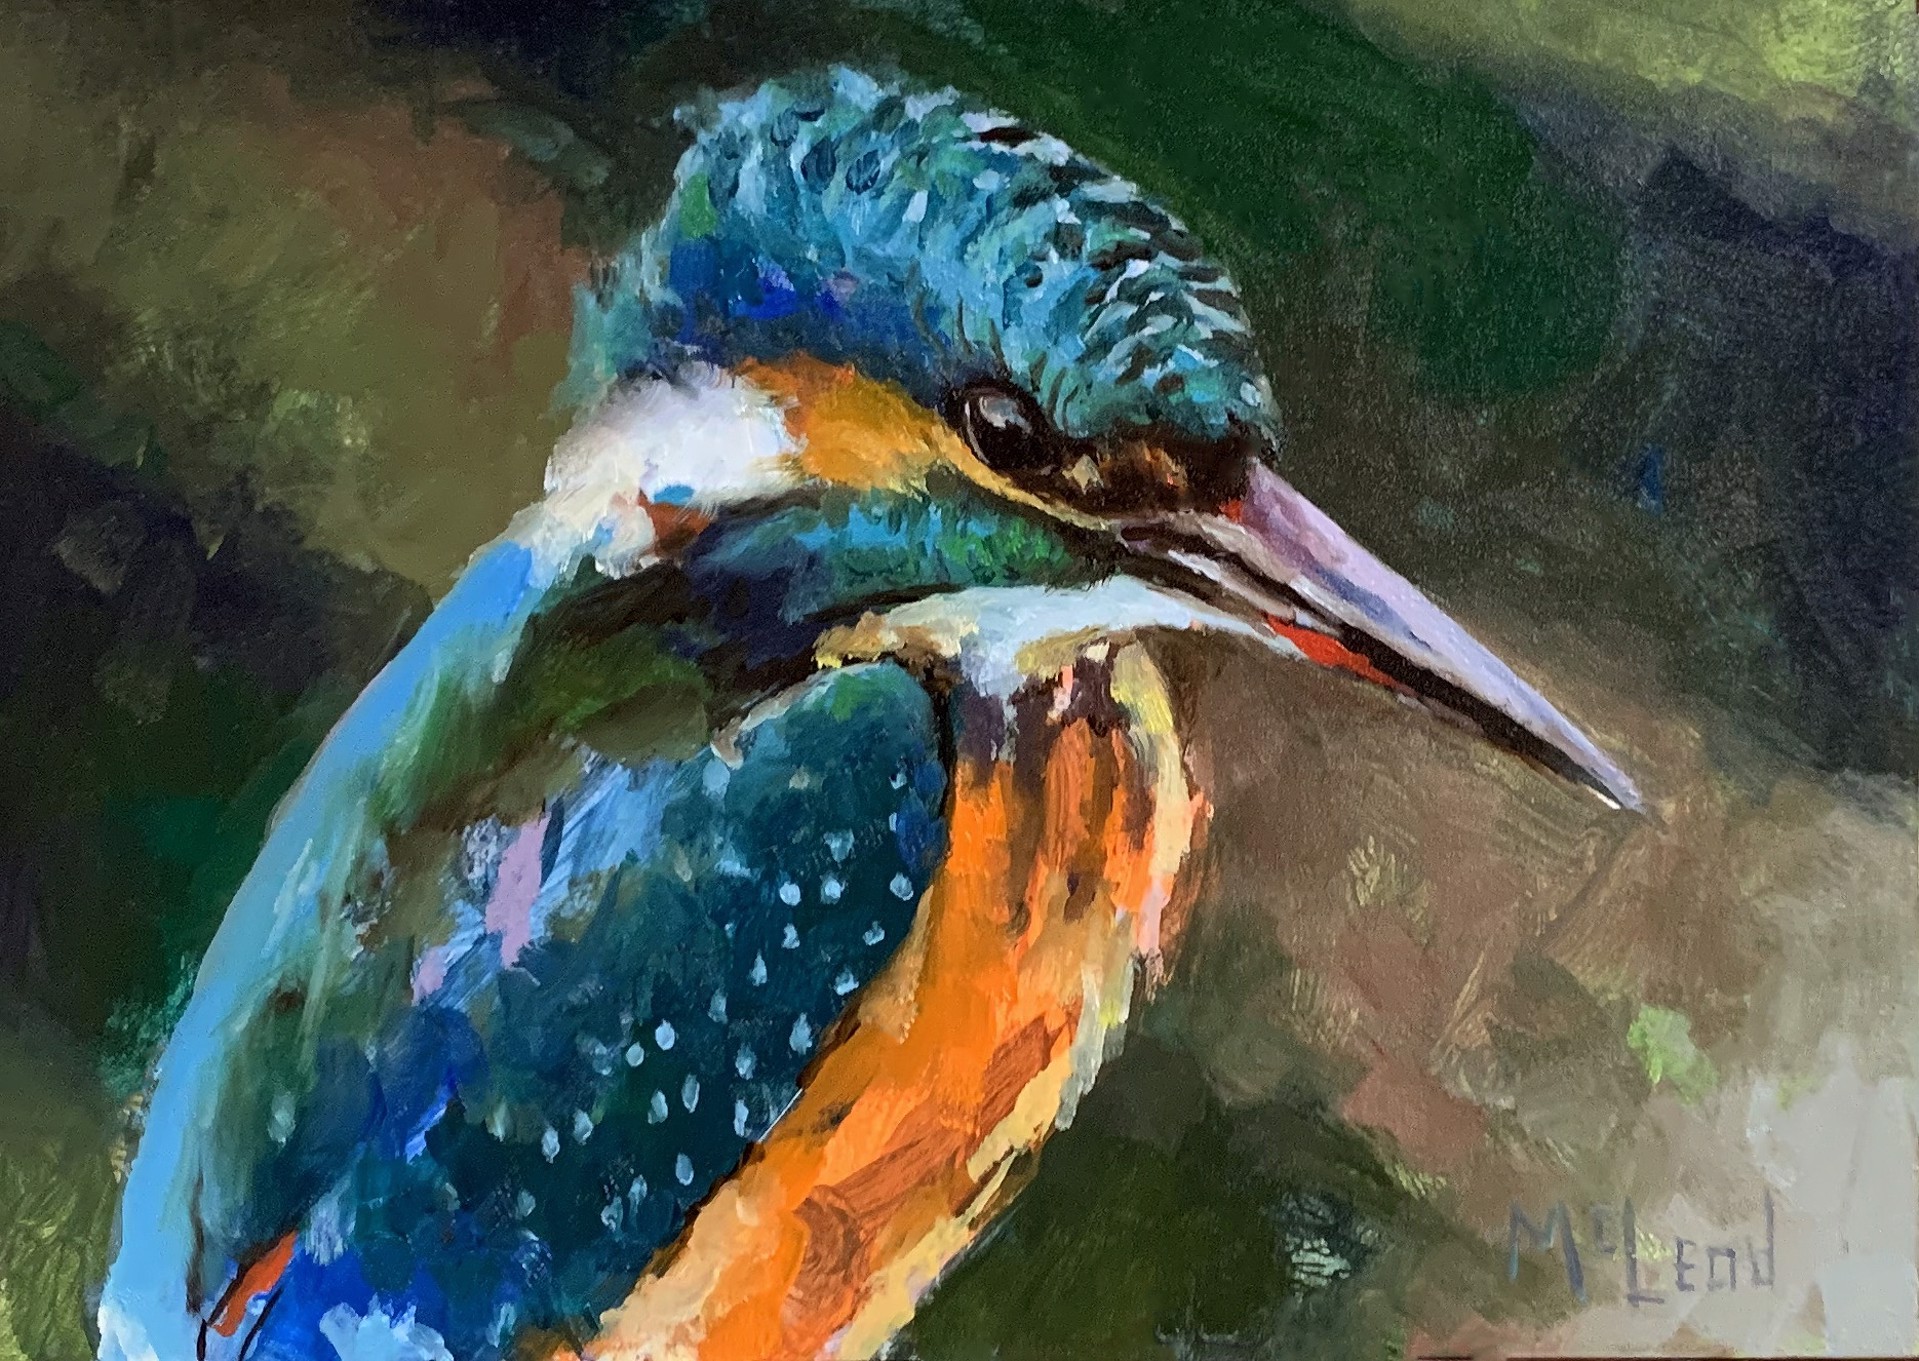 Kingfisher by John McLeod